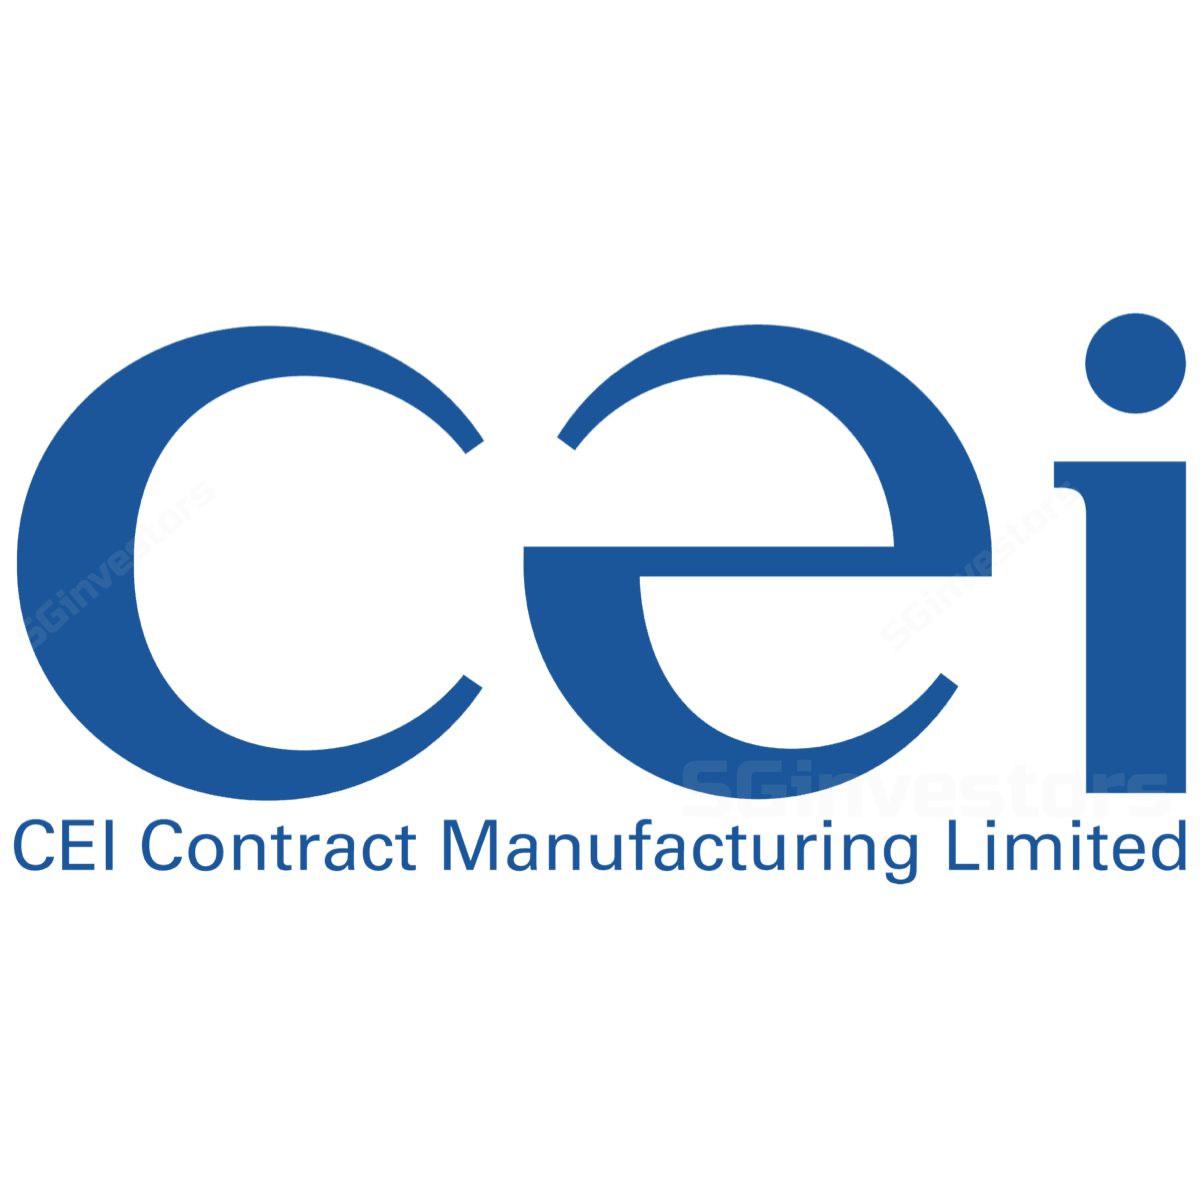 CEI Limited - CIMB Research 2017-02-13: Rewarding shareholders